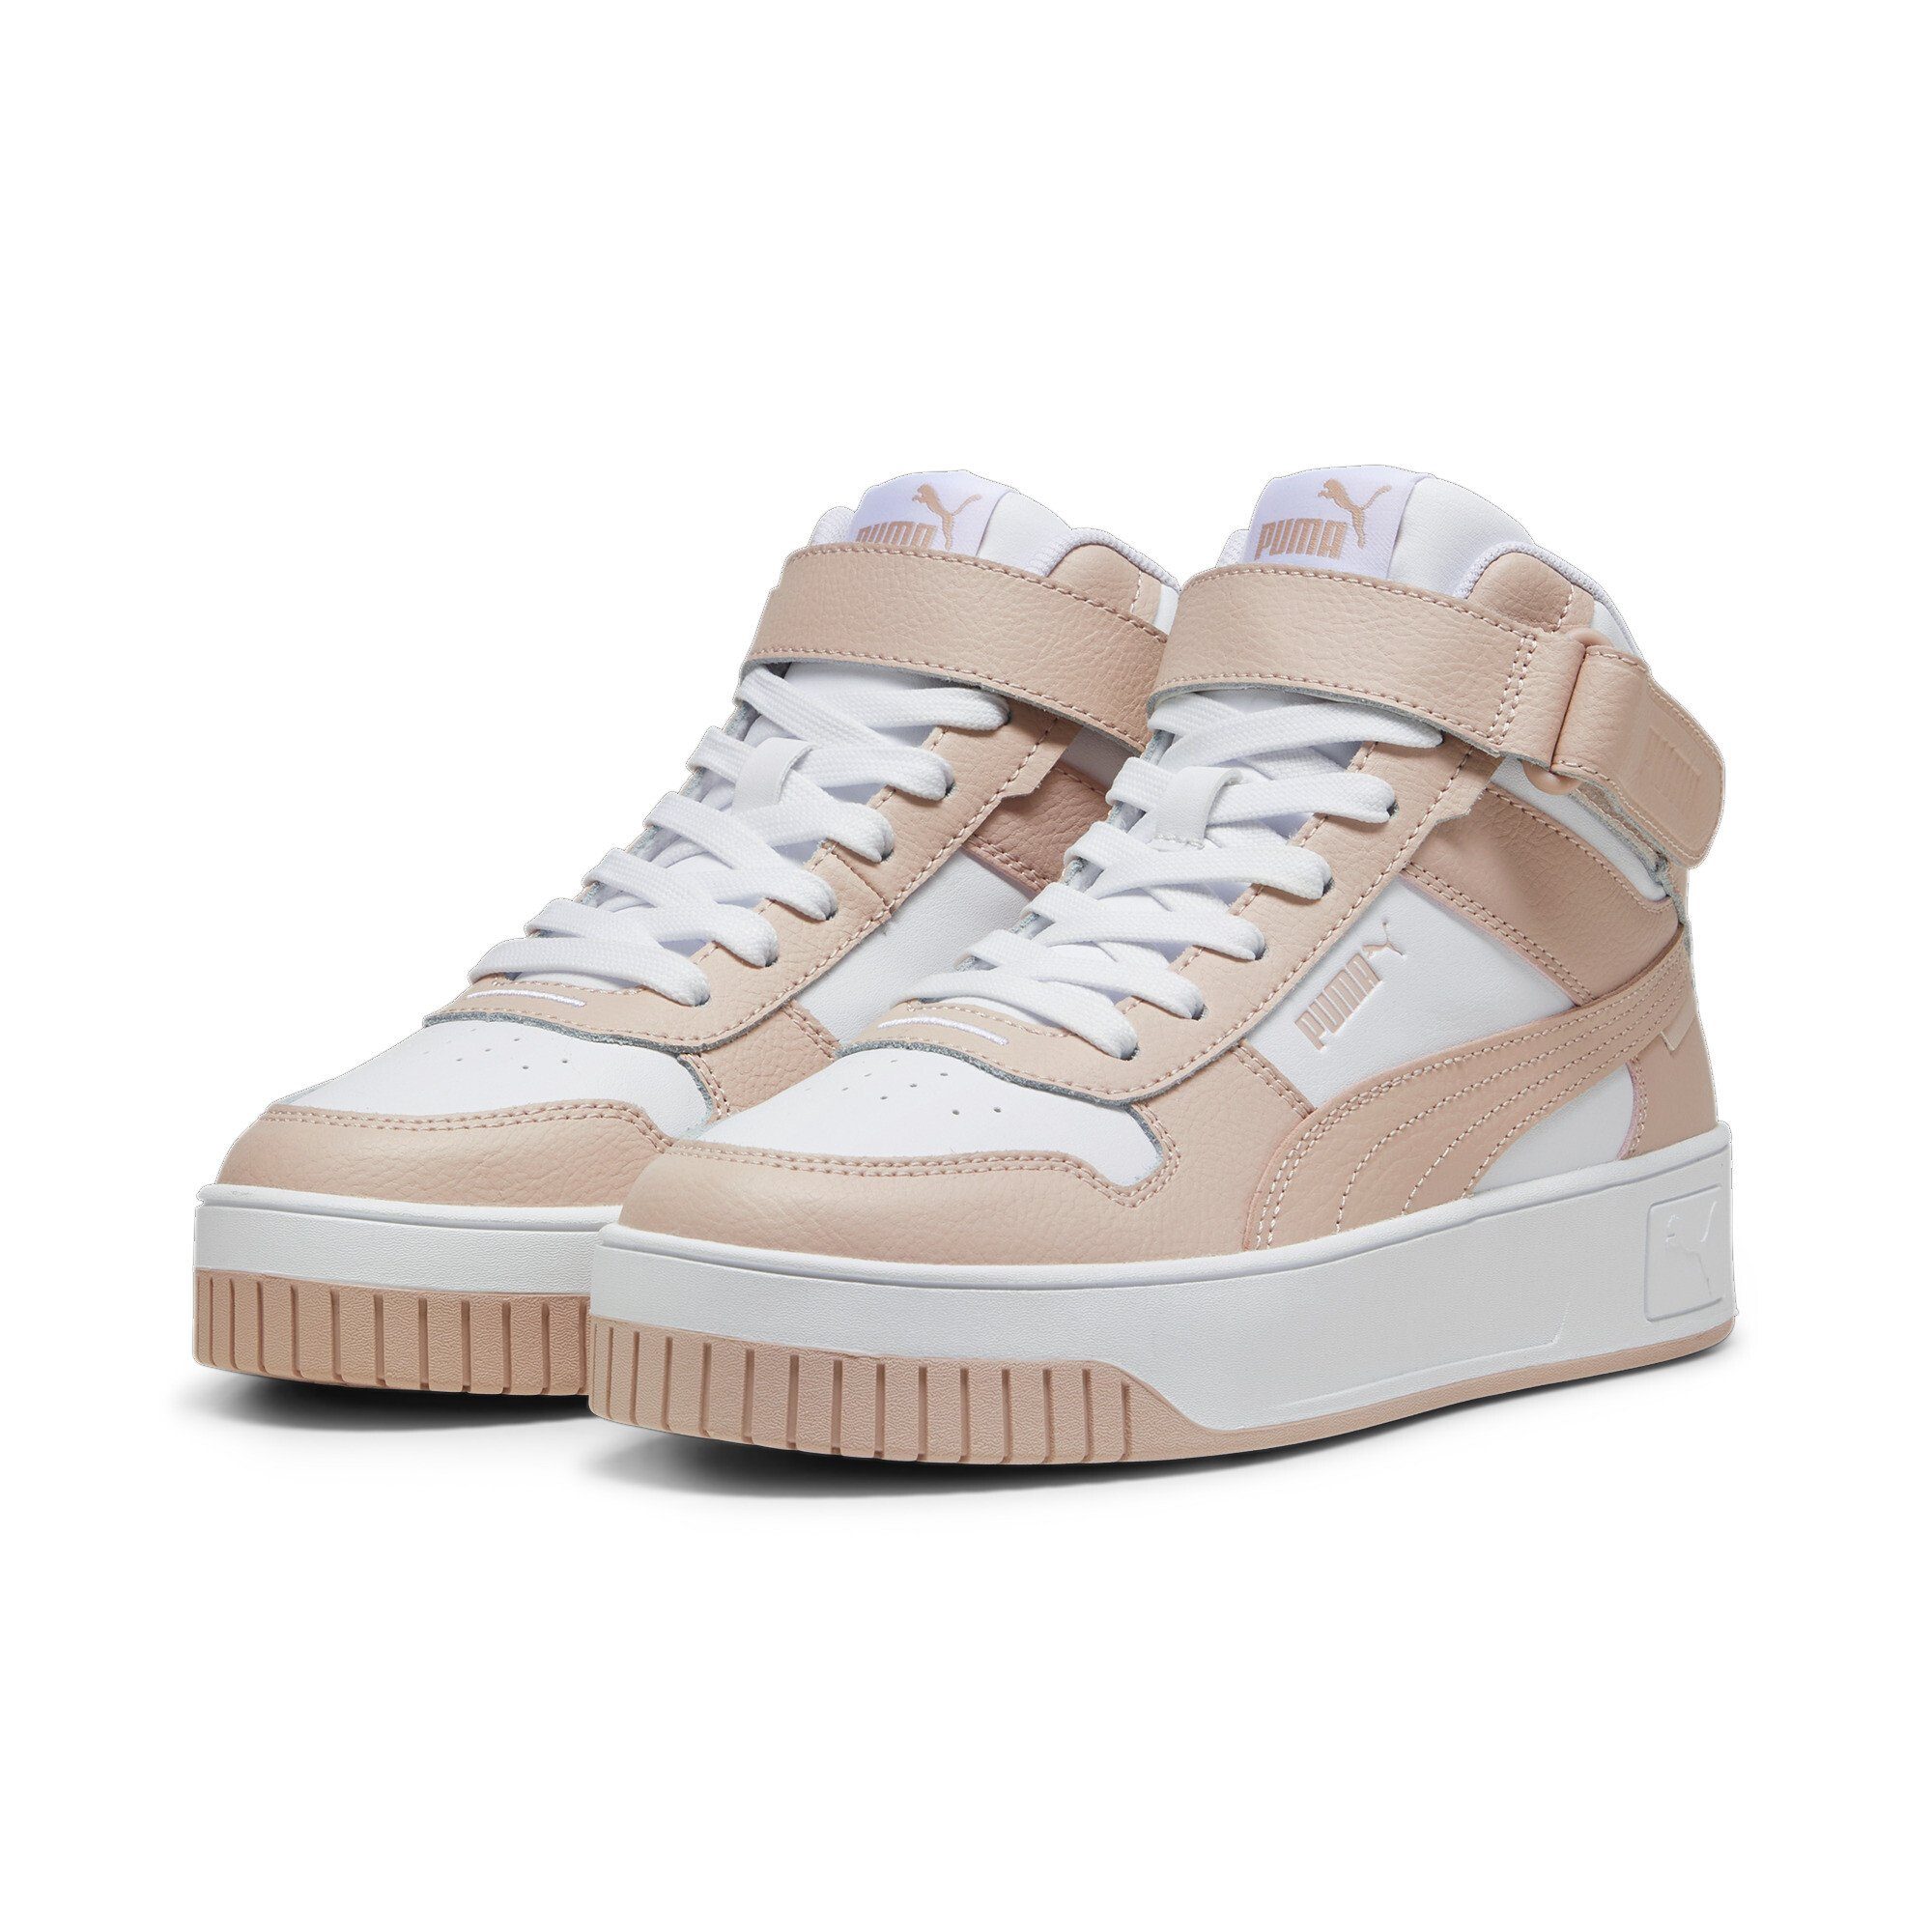 PUMA Carina Street Mid Sneakers Damen Sneaker White Rose Quartz Pink